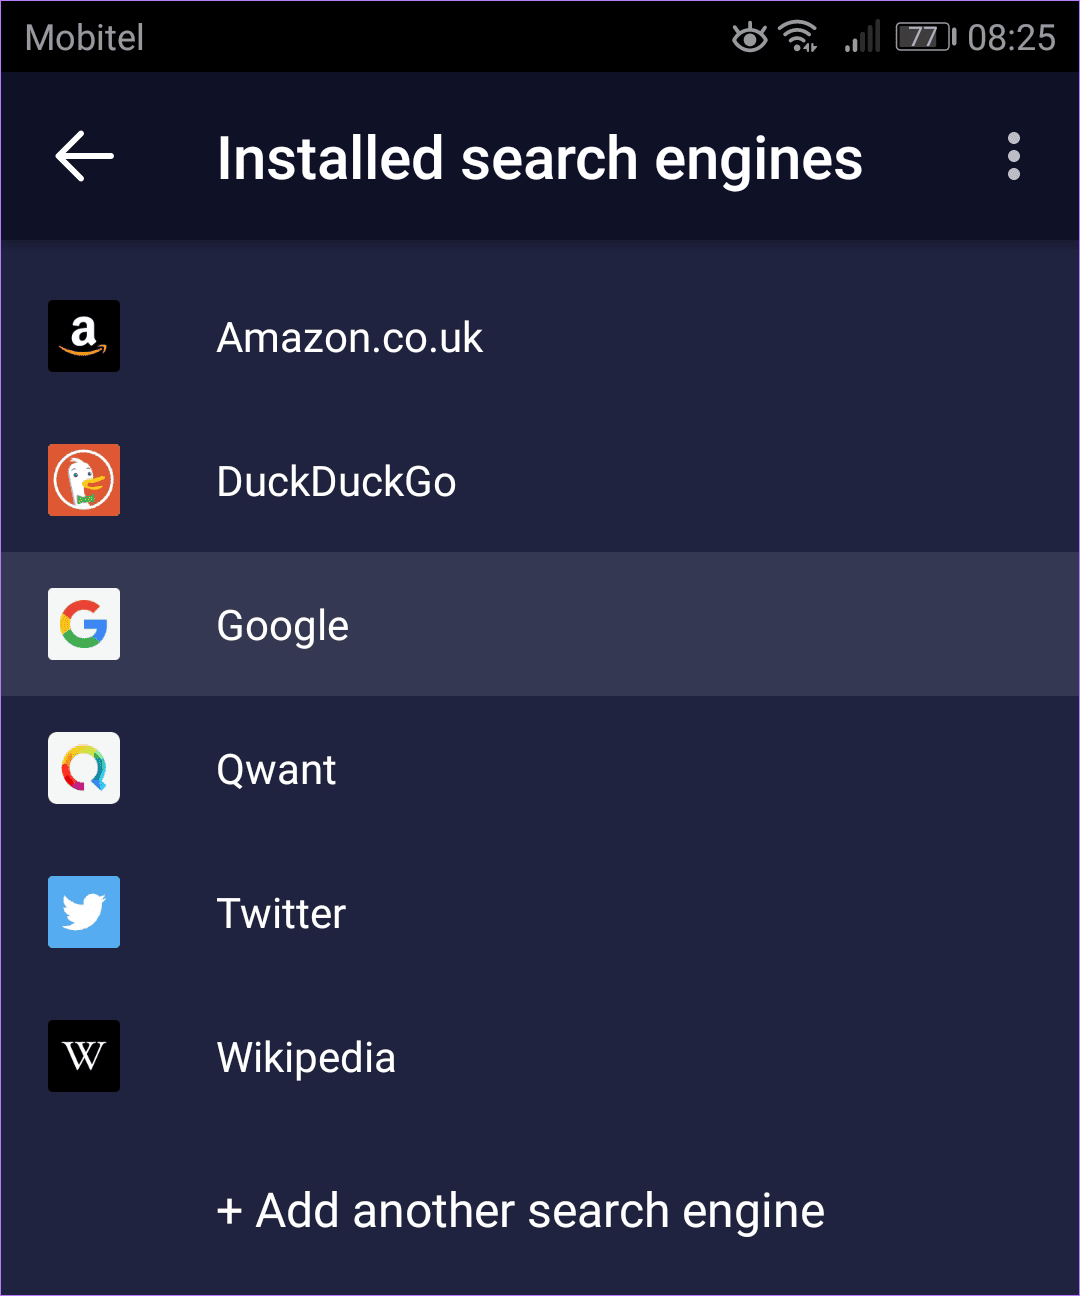 Firefox Focus مقابل DuckDuckGo: ما هو أفضل متصفح للخصوصية - %categories